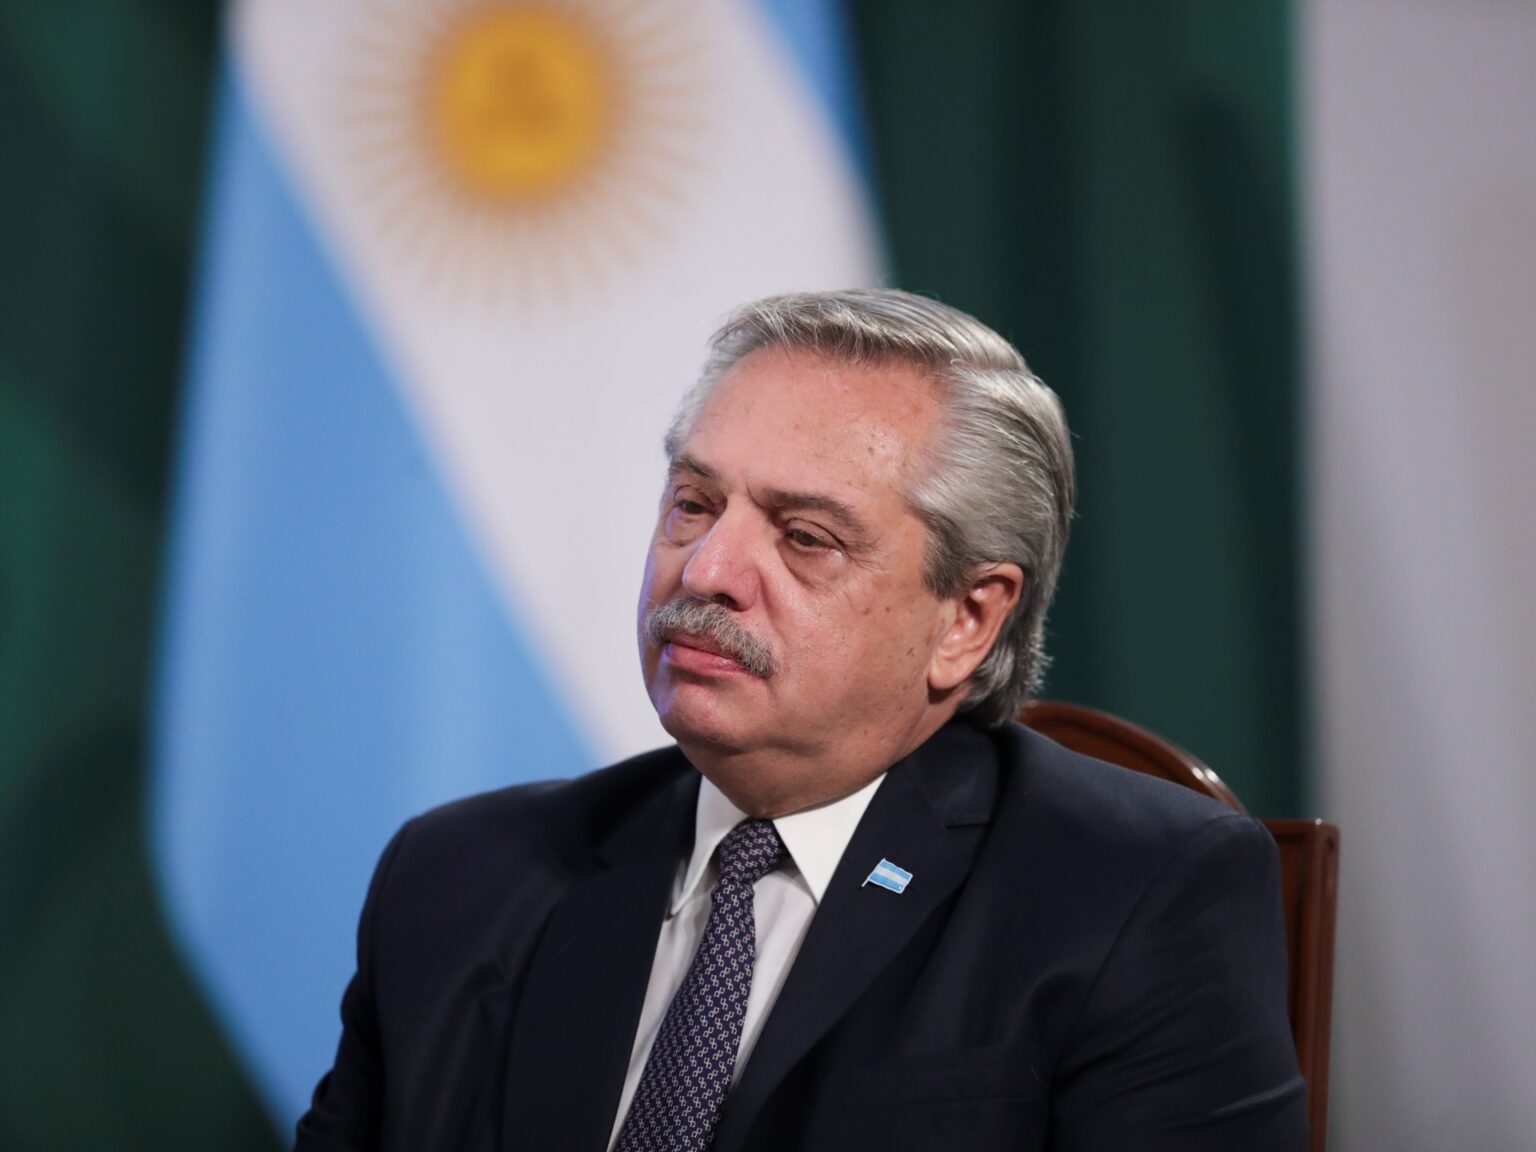 Argentine President Fernandez will not search